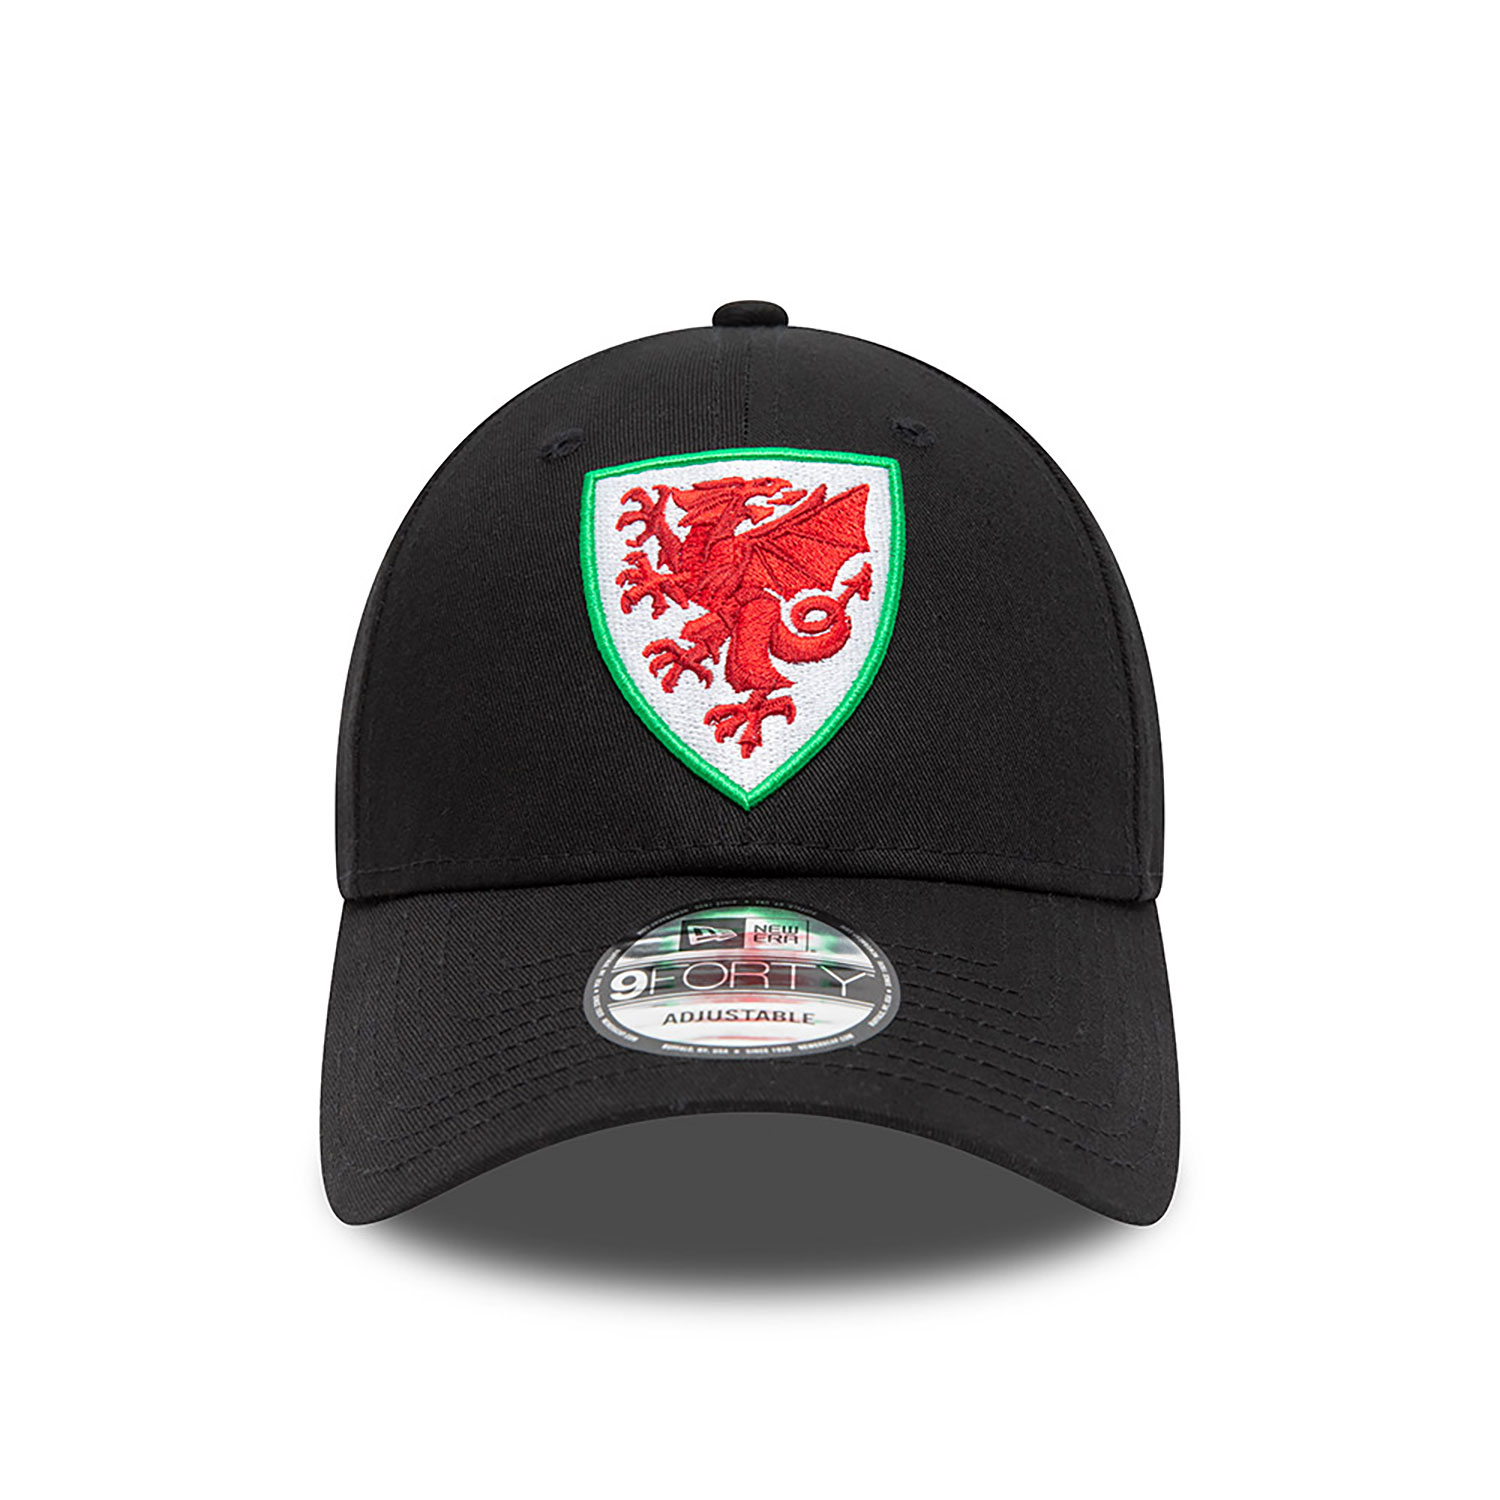 Football Association Of Wales Black 9FORTY Adjustable Cap